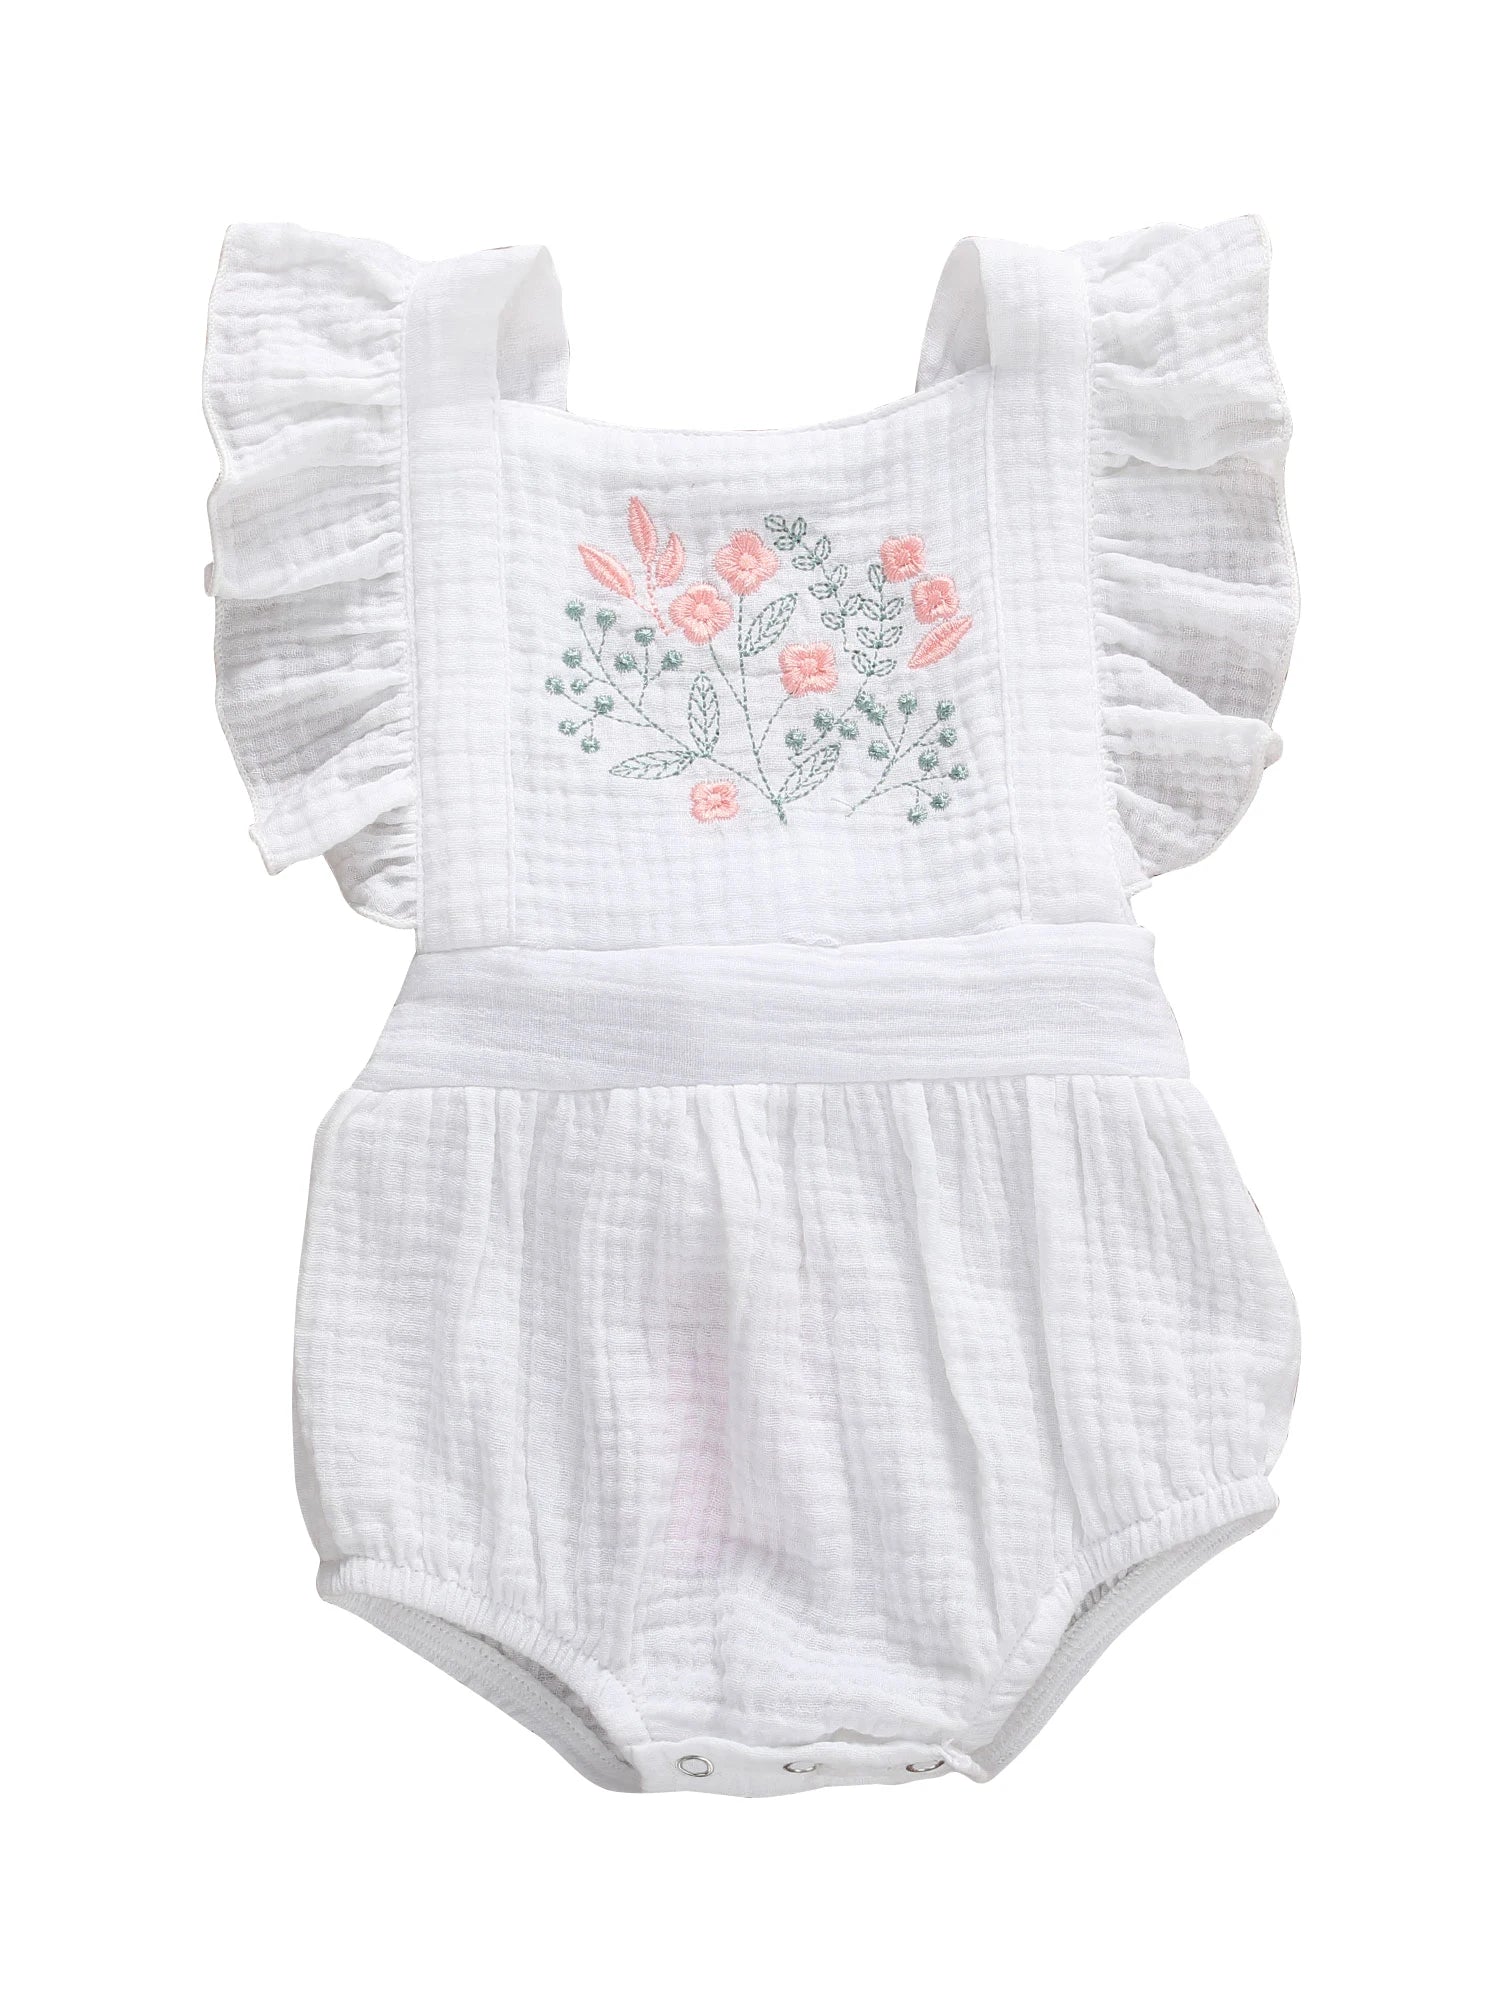 2020 Baby Summer Clothing 0-18M Newborn Baby Girl Jumpsuit Cotton Linen Short Ruffle Sleeve Sunsuit Embroidery Flowers Bodysuit